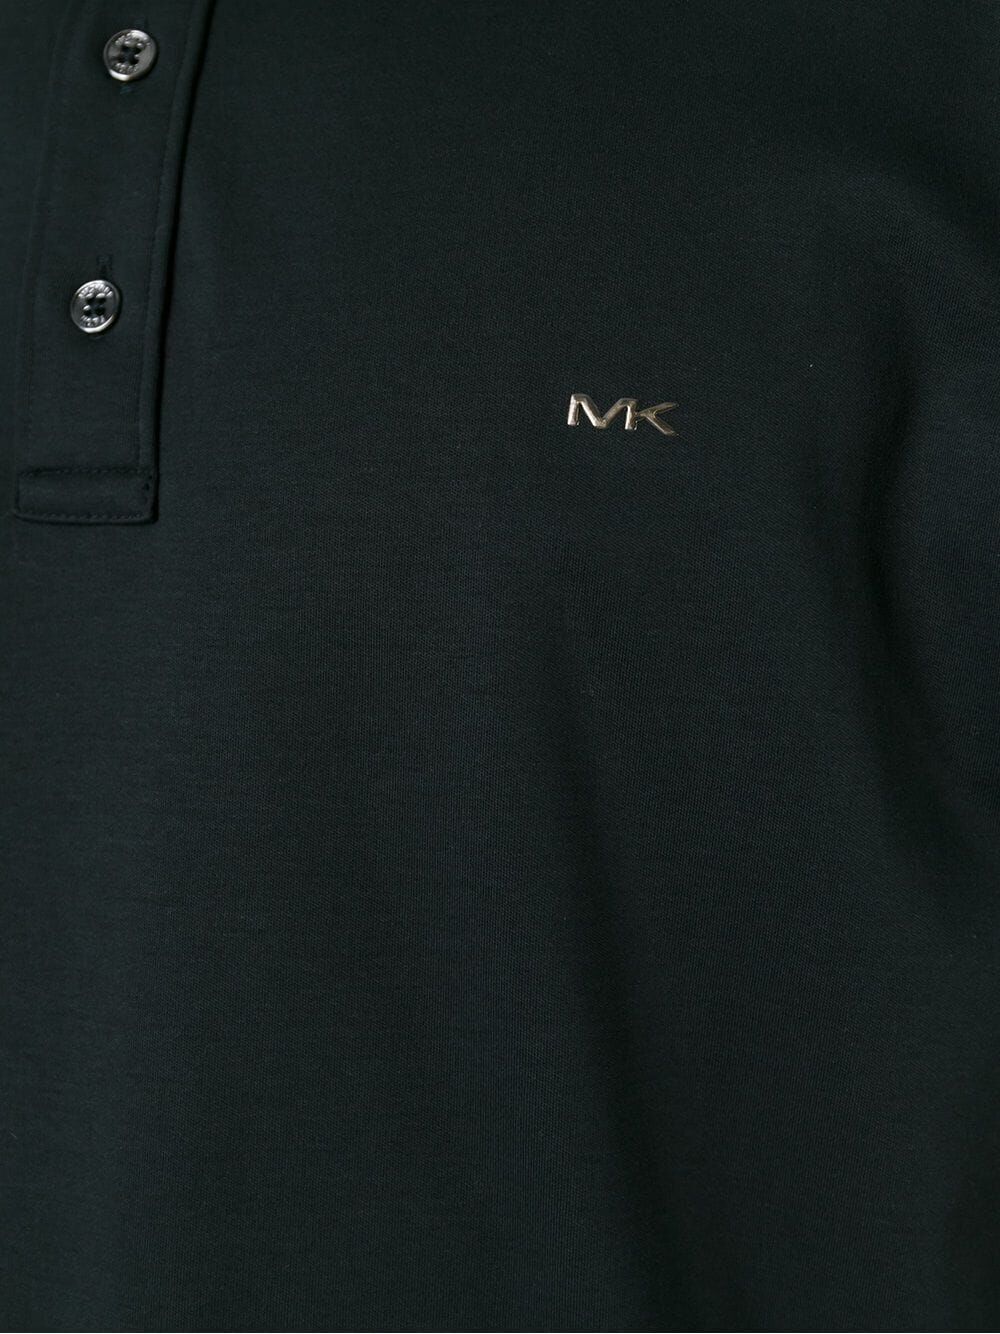 Shop Michael Kors Sleek Mk Polo In Black